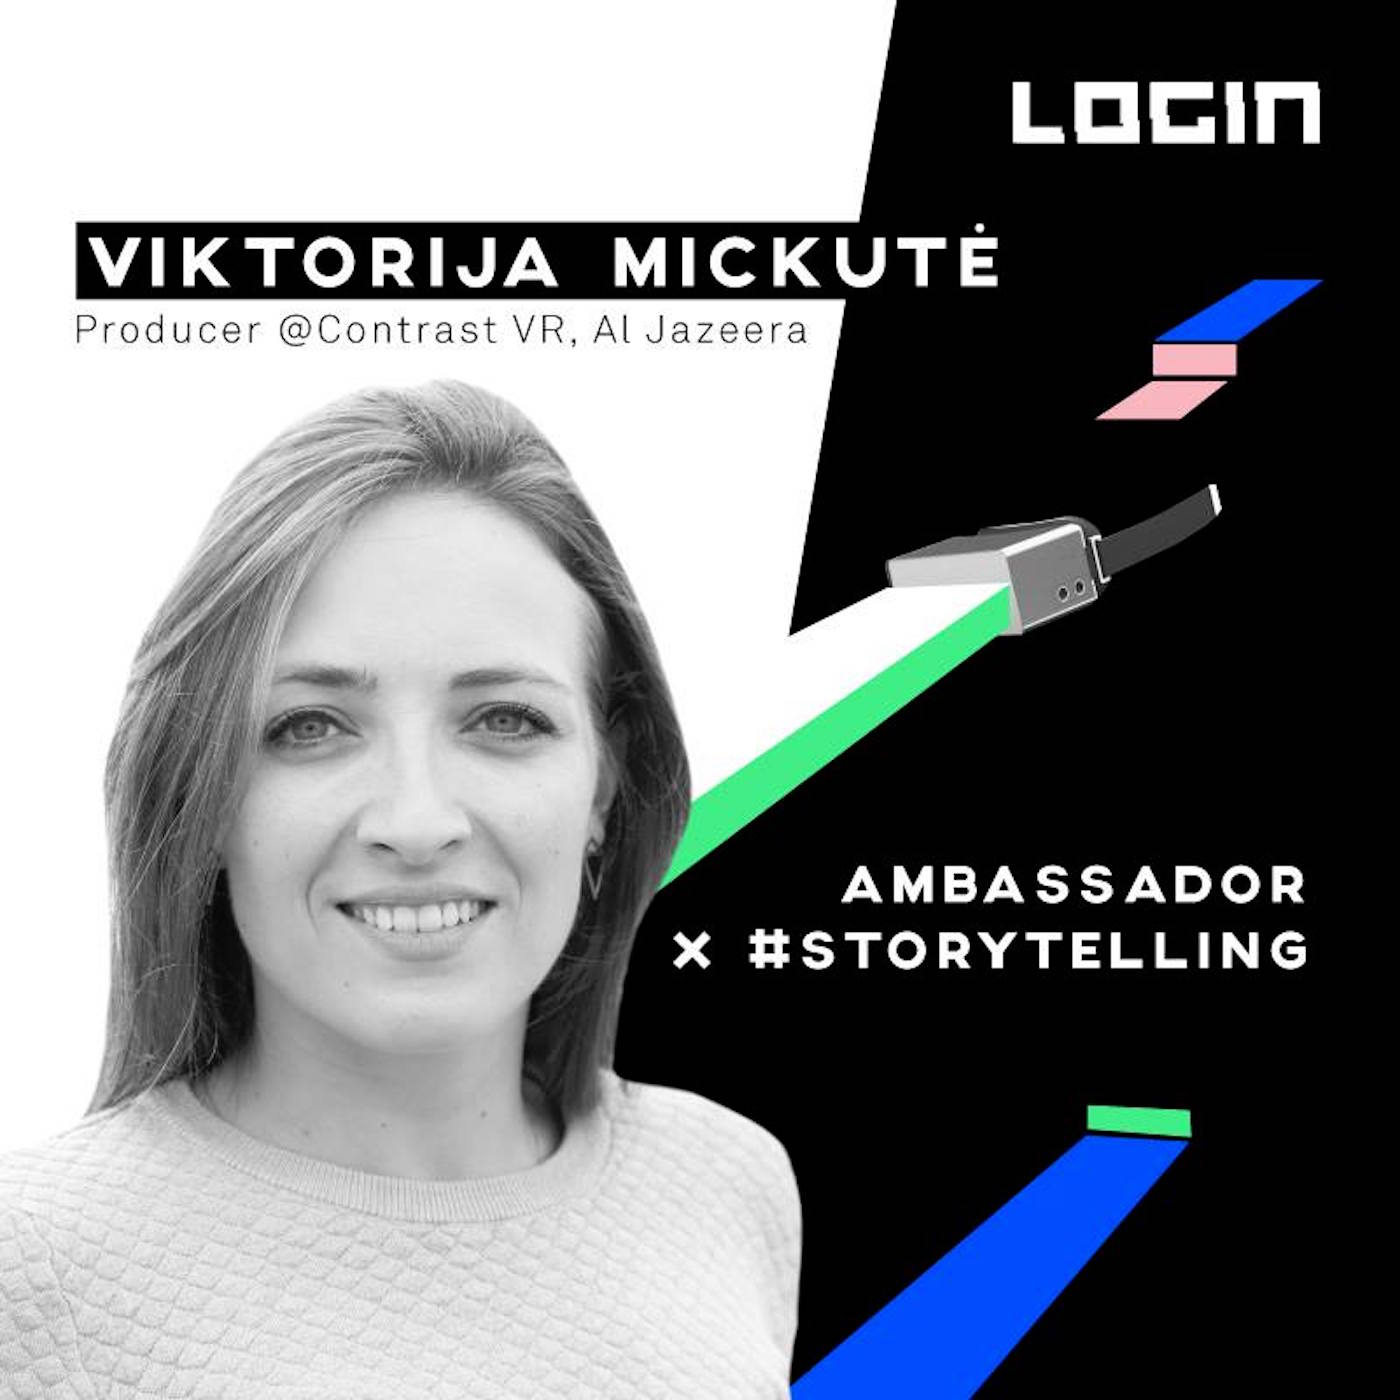 Viktorija Mickutė on global immersive storytelling at Login 2018